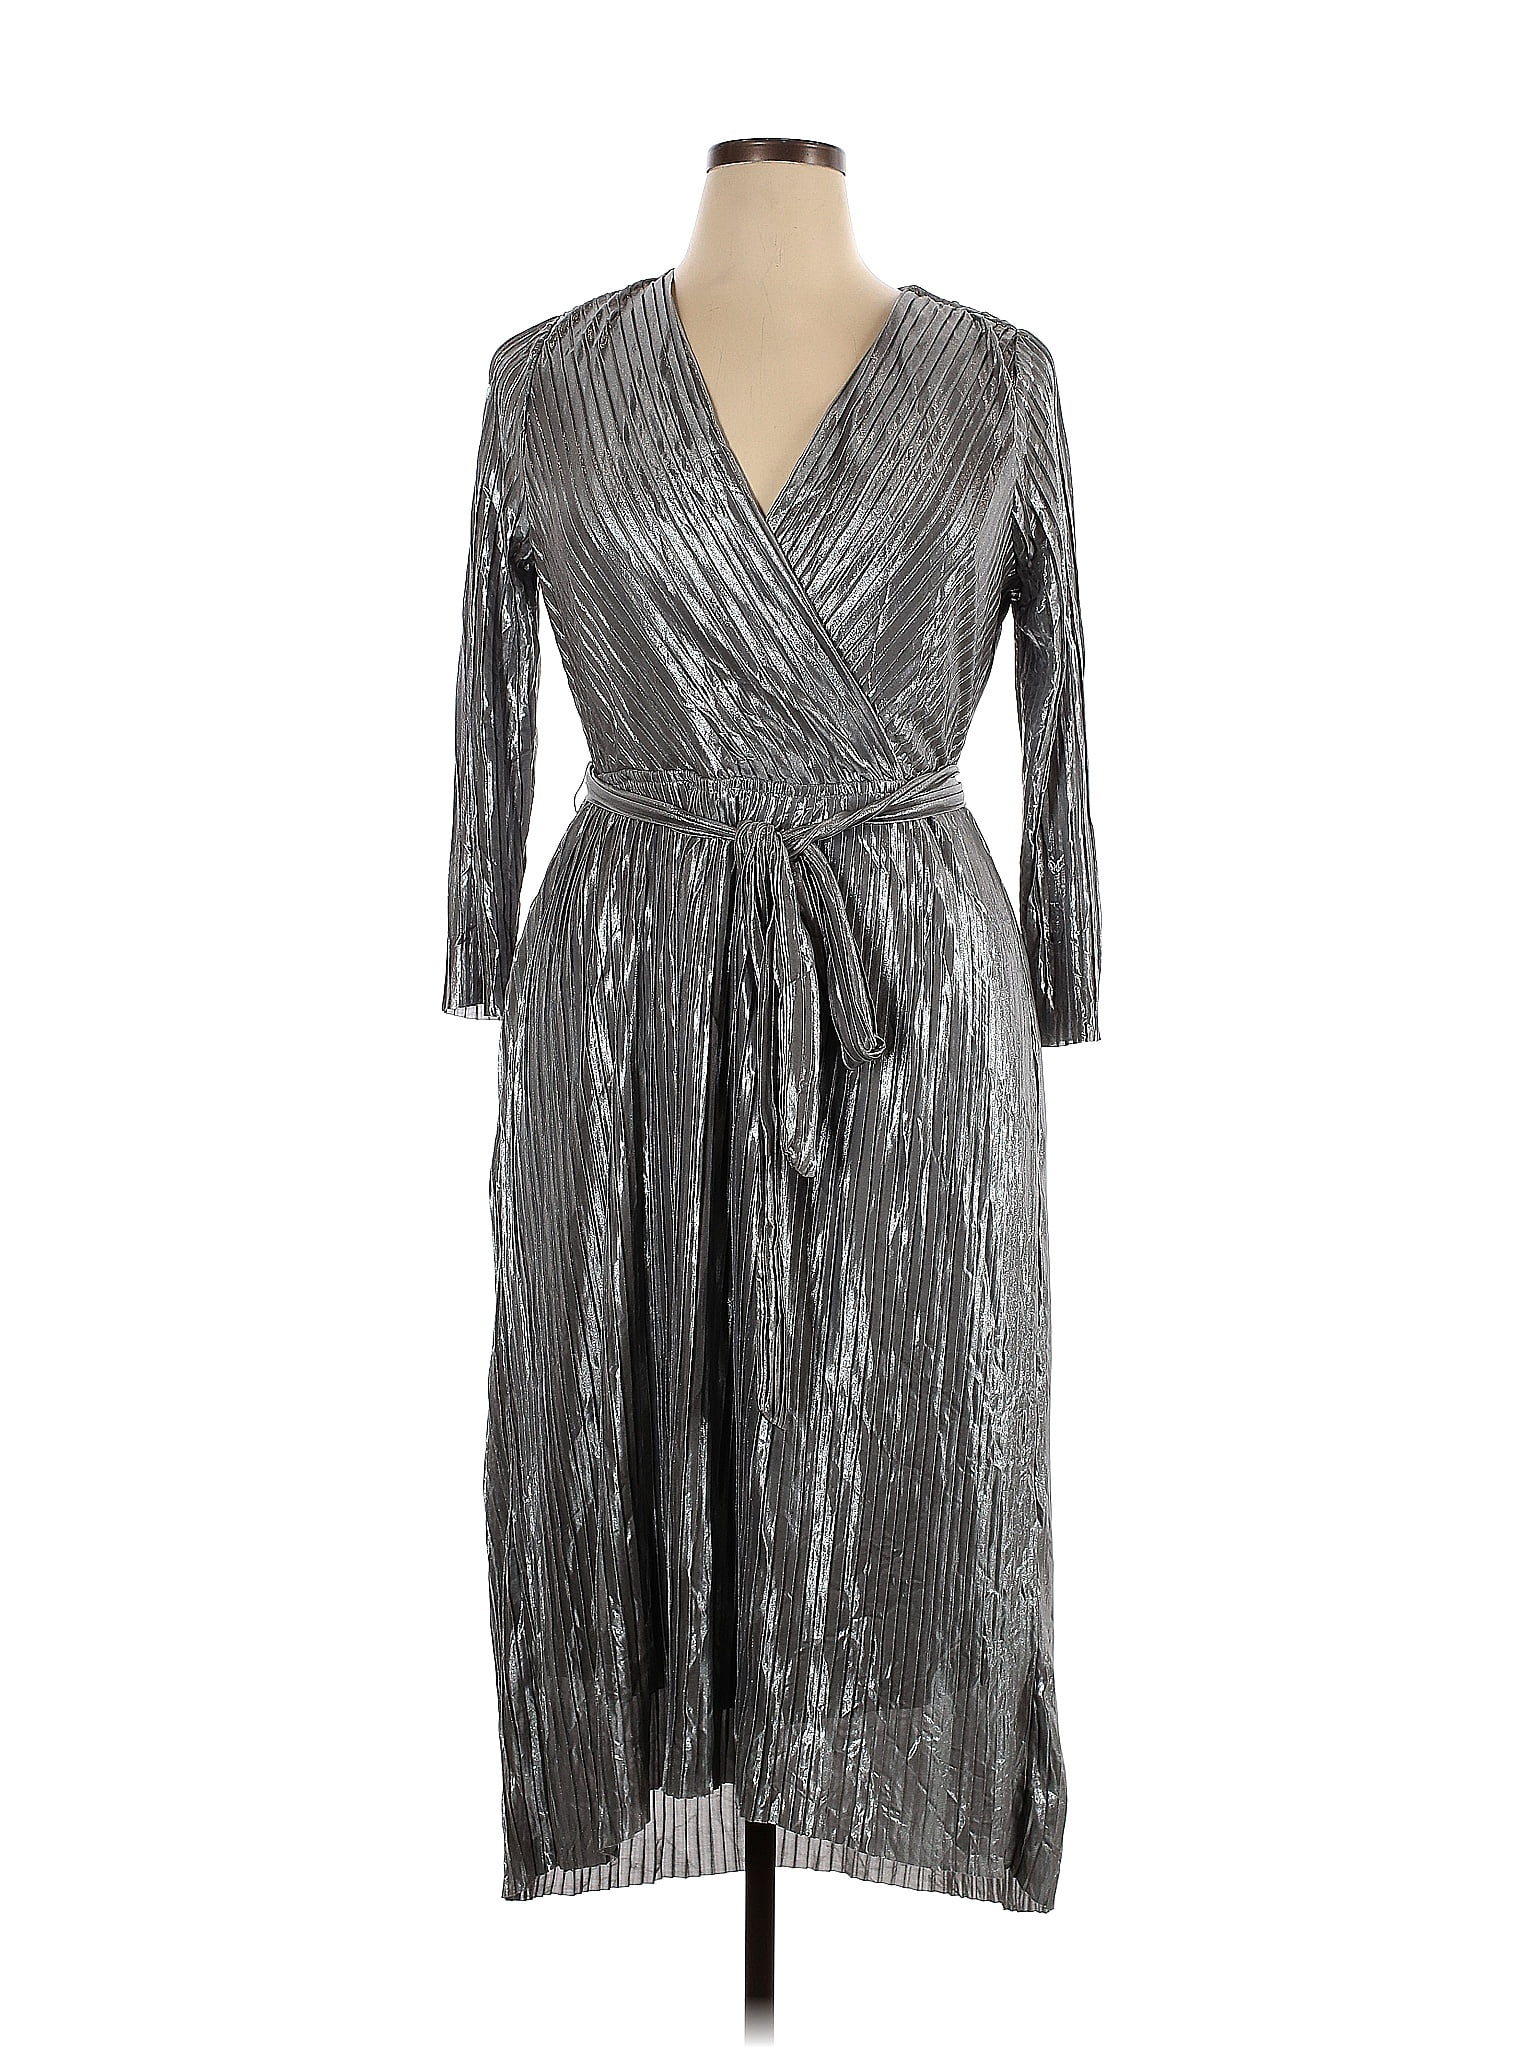 Lane Bryant 100% Polyester Silver Cocktail Dress Size 16 (Plus) - 56% ...